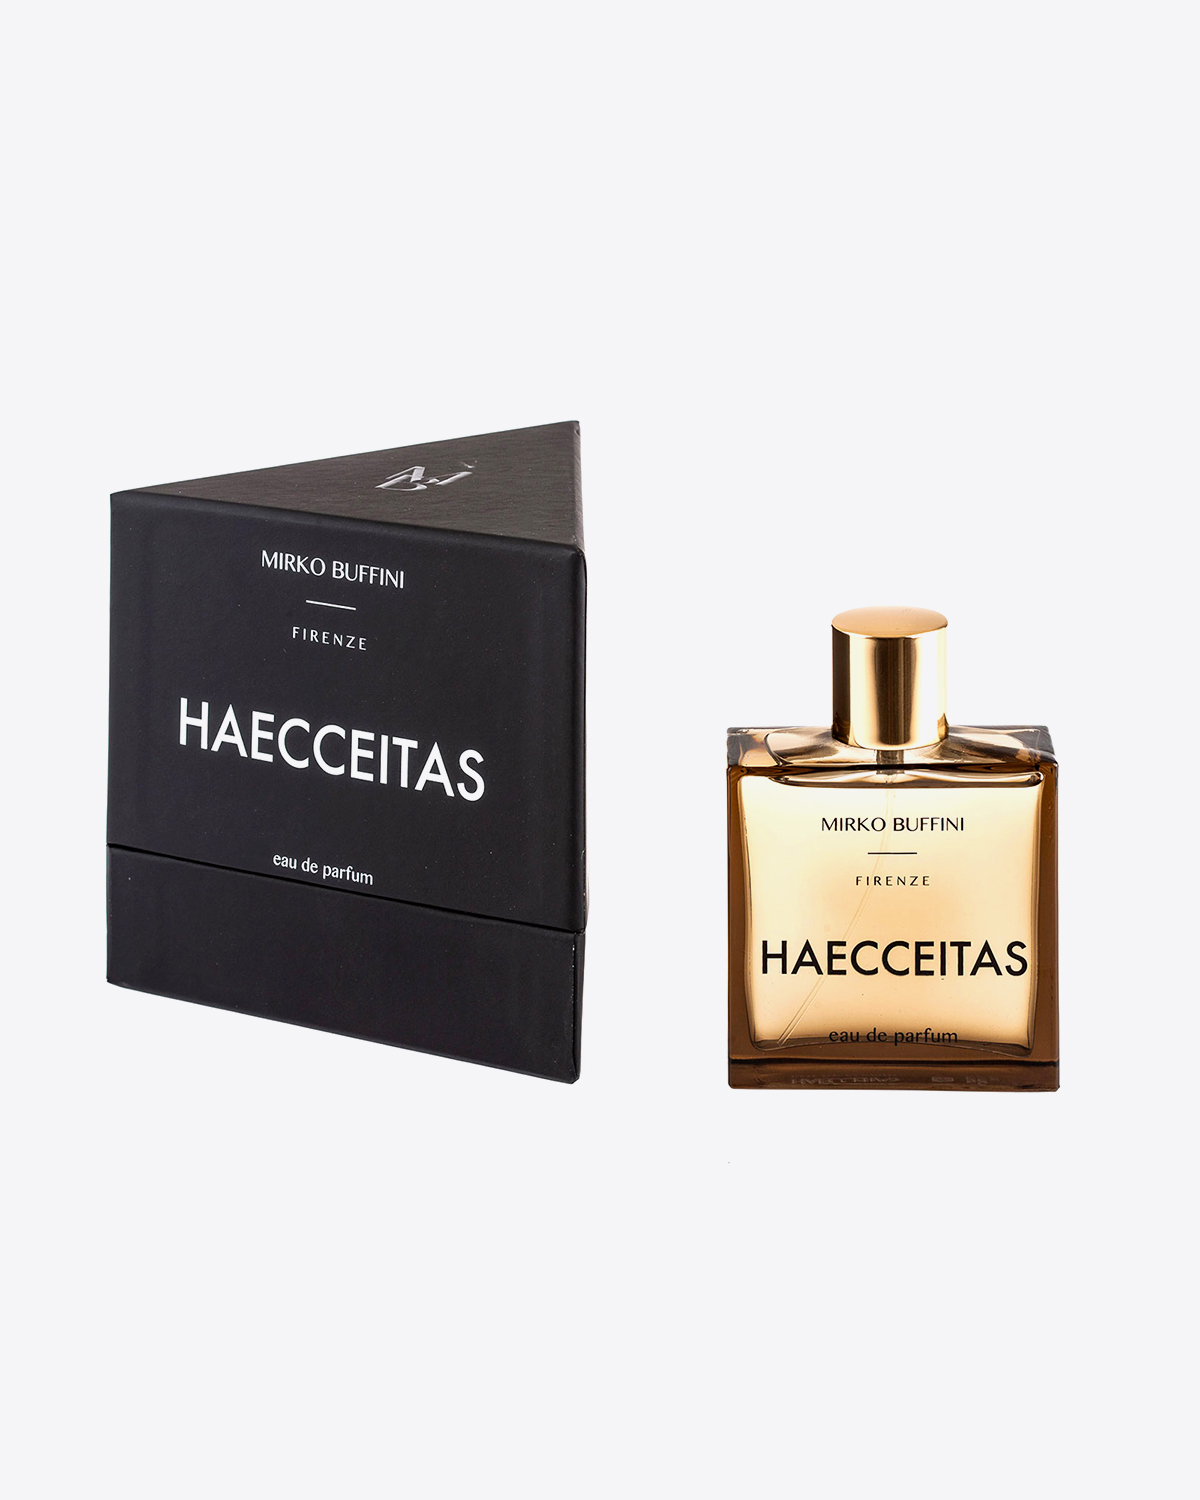 Parfum Haecceitas Miko Buffini. Flacon de 30 ml vendu avec sa boite triangulaire noire.